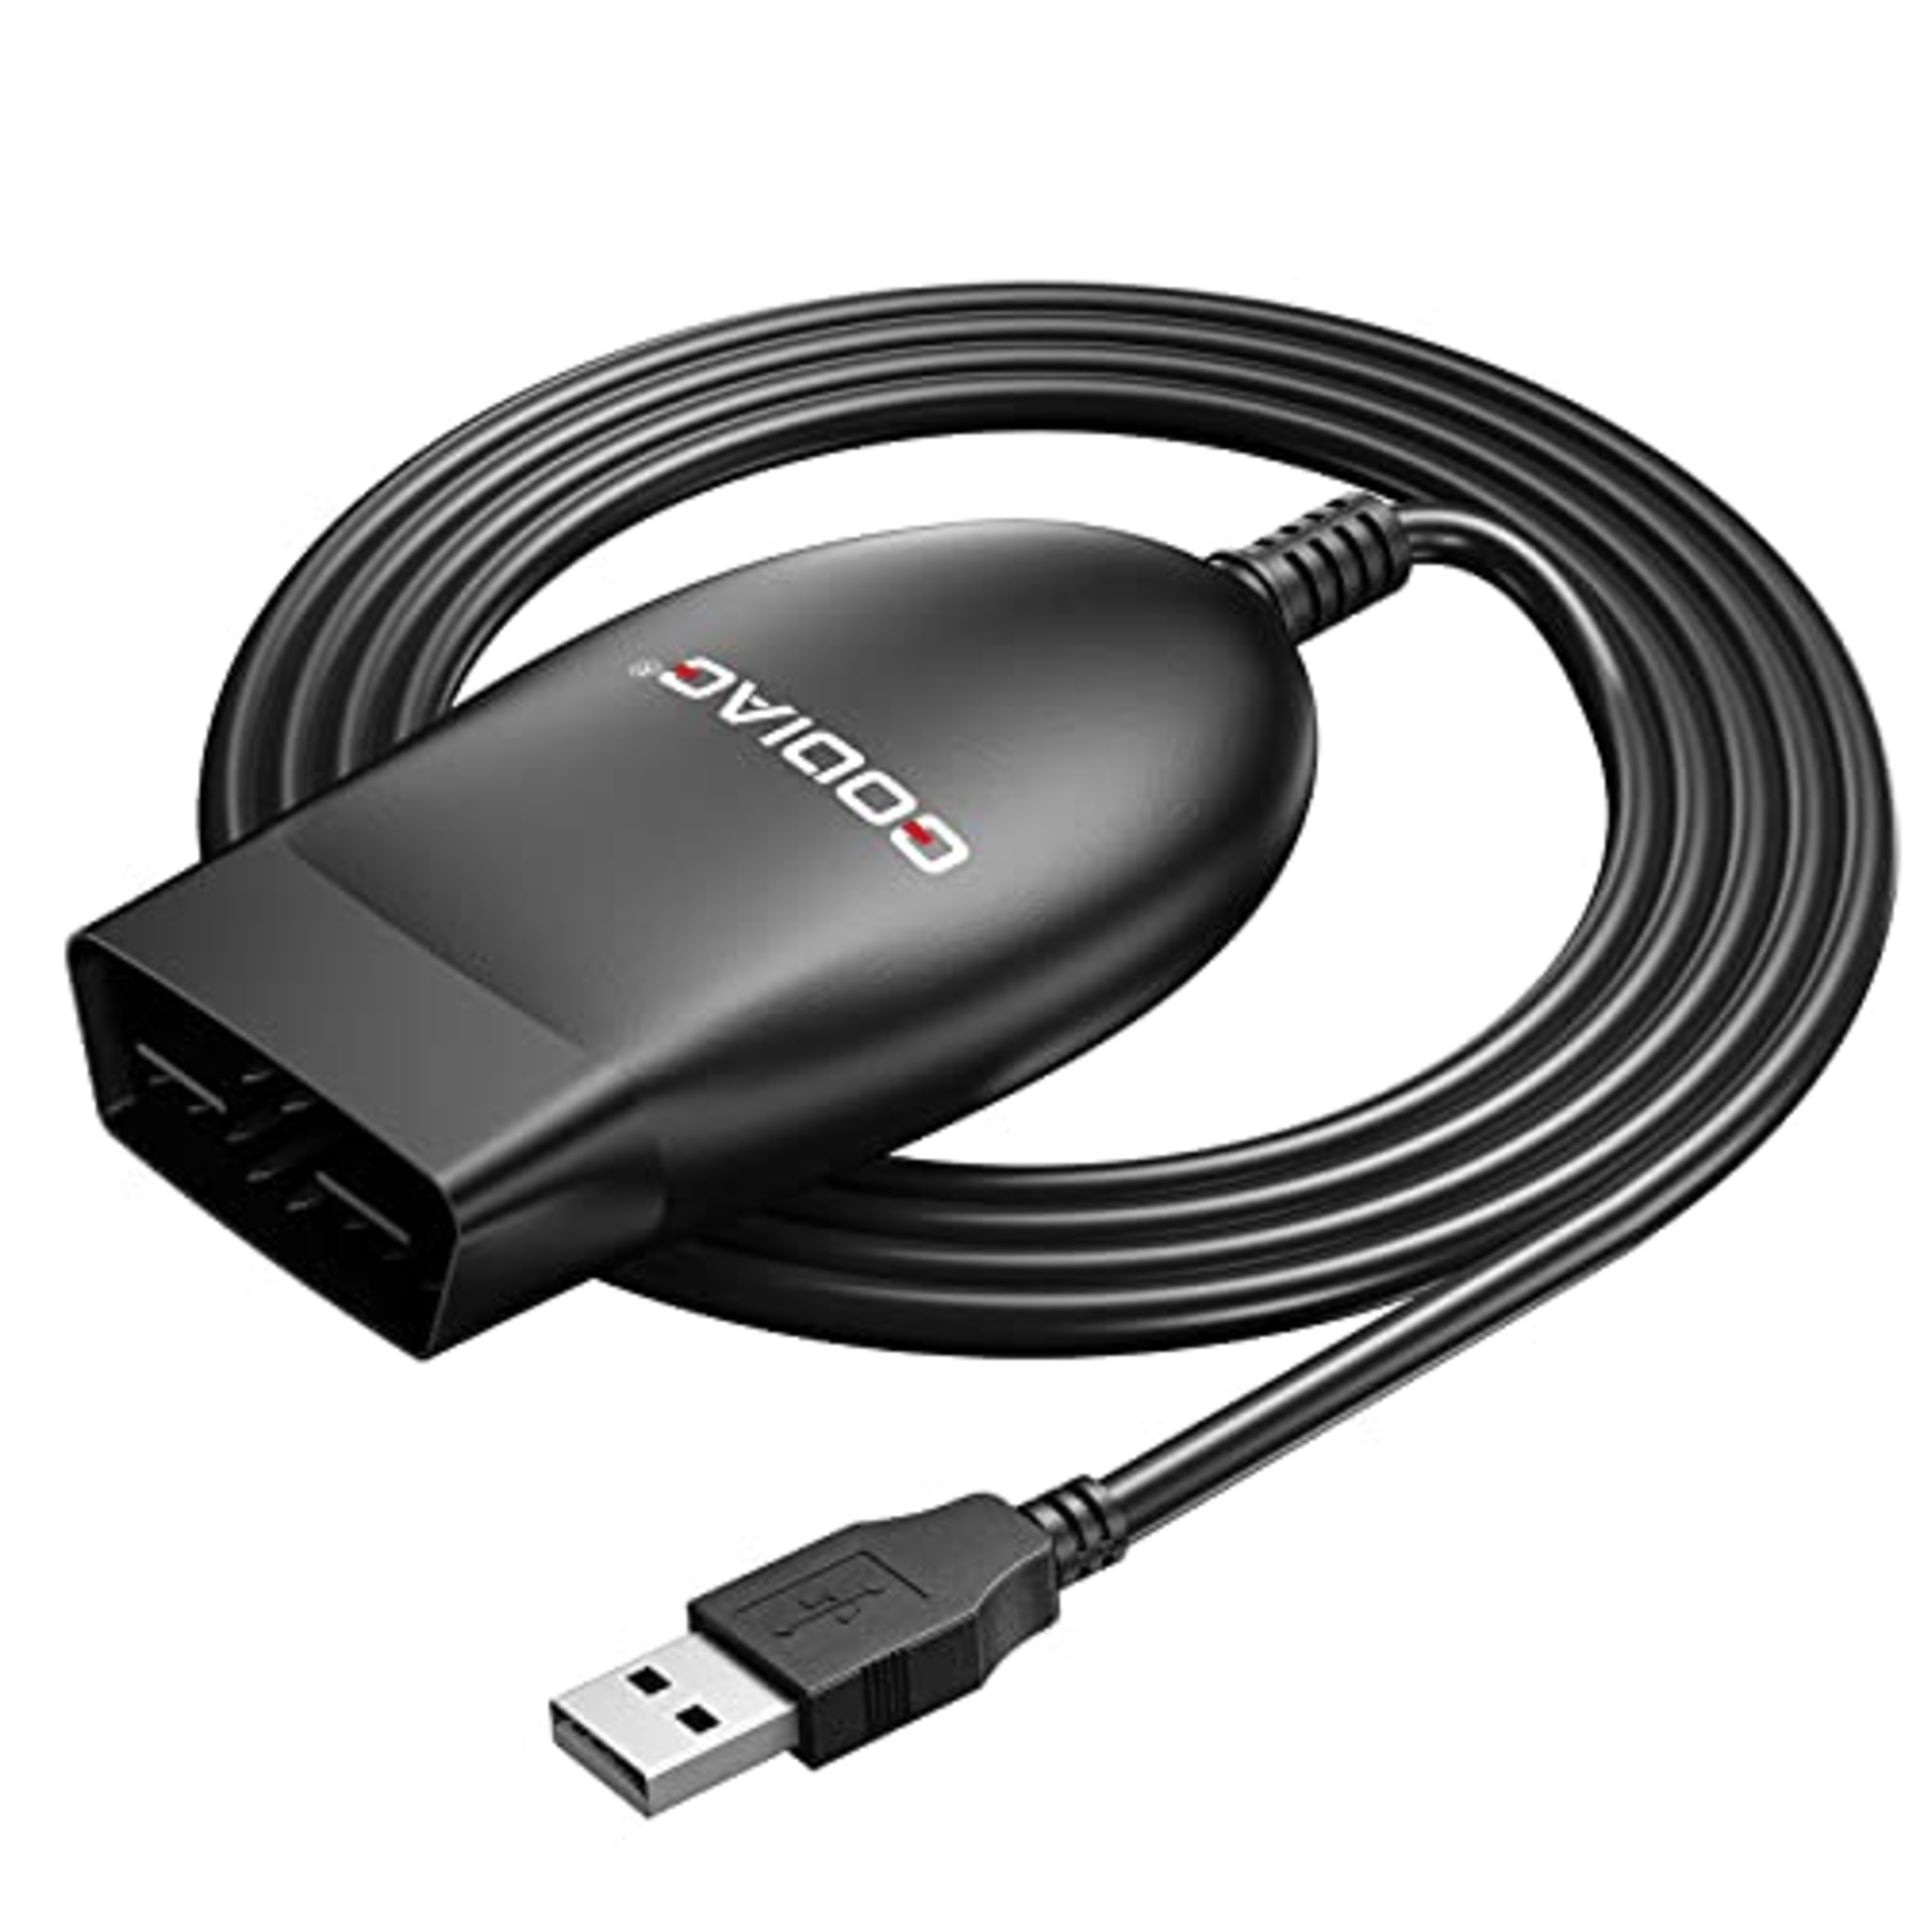 J2534 Openport 2.0 Cable, GODIAG OBD2 USB Adapter ECU Diagnostic Tool, Flash Chip Tunn